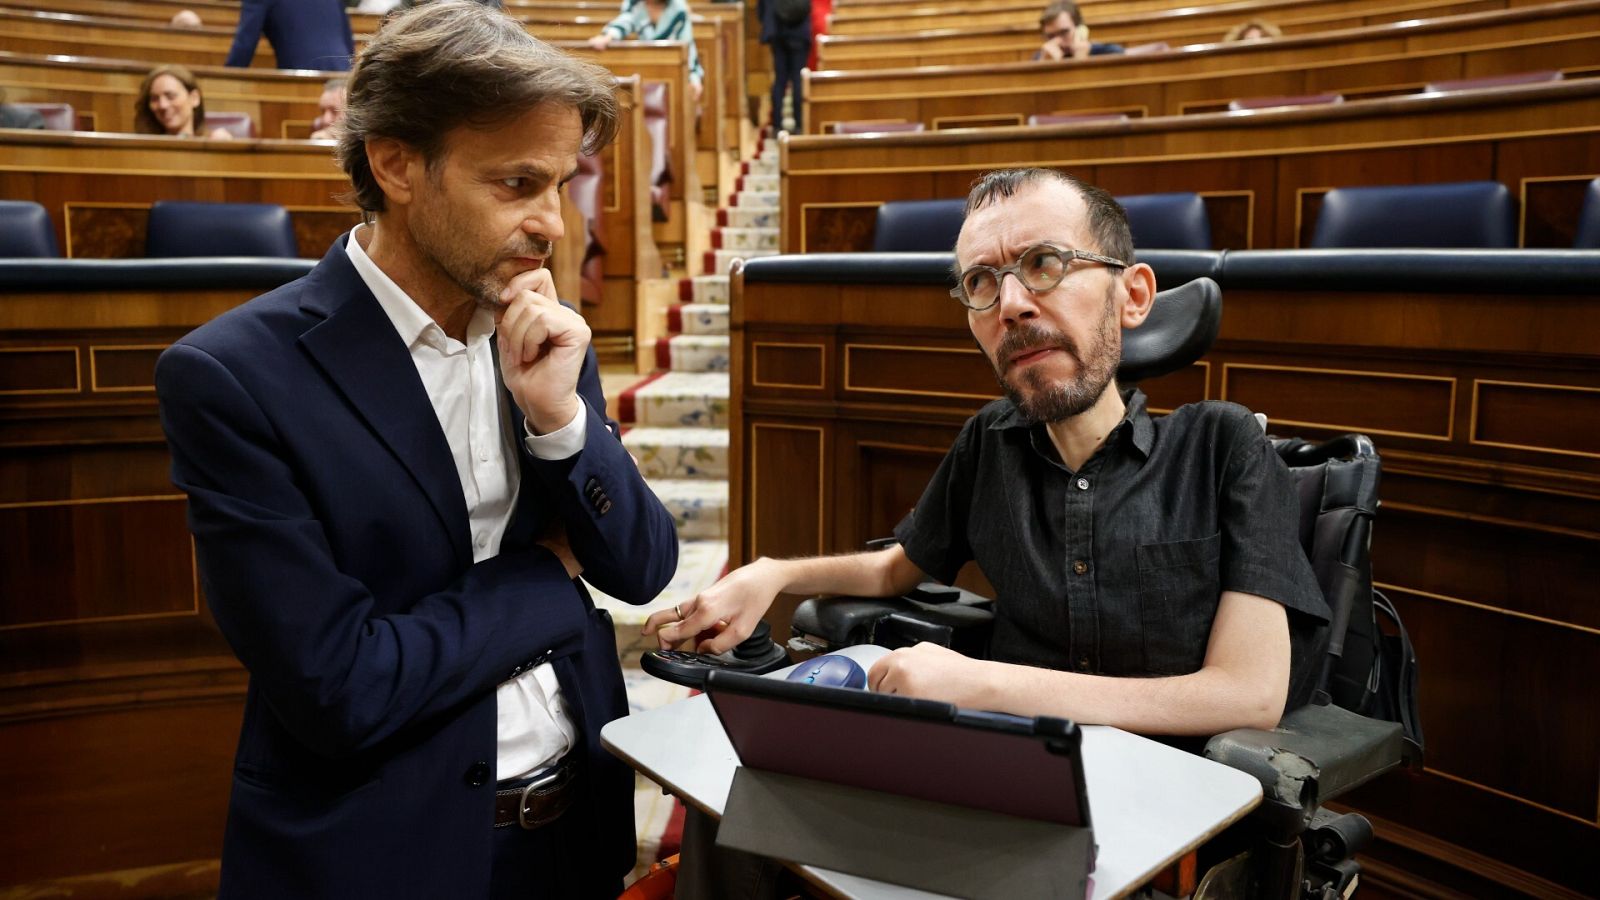 Los diputados de Unidas Podemos Jaume Asens y Pablo Echenique